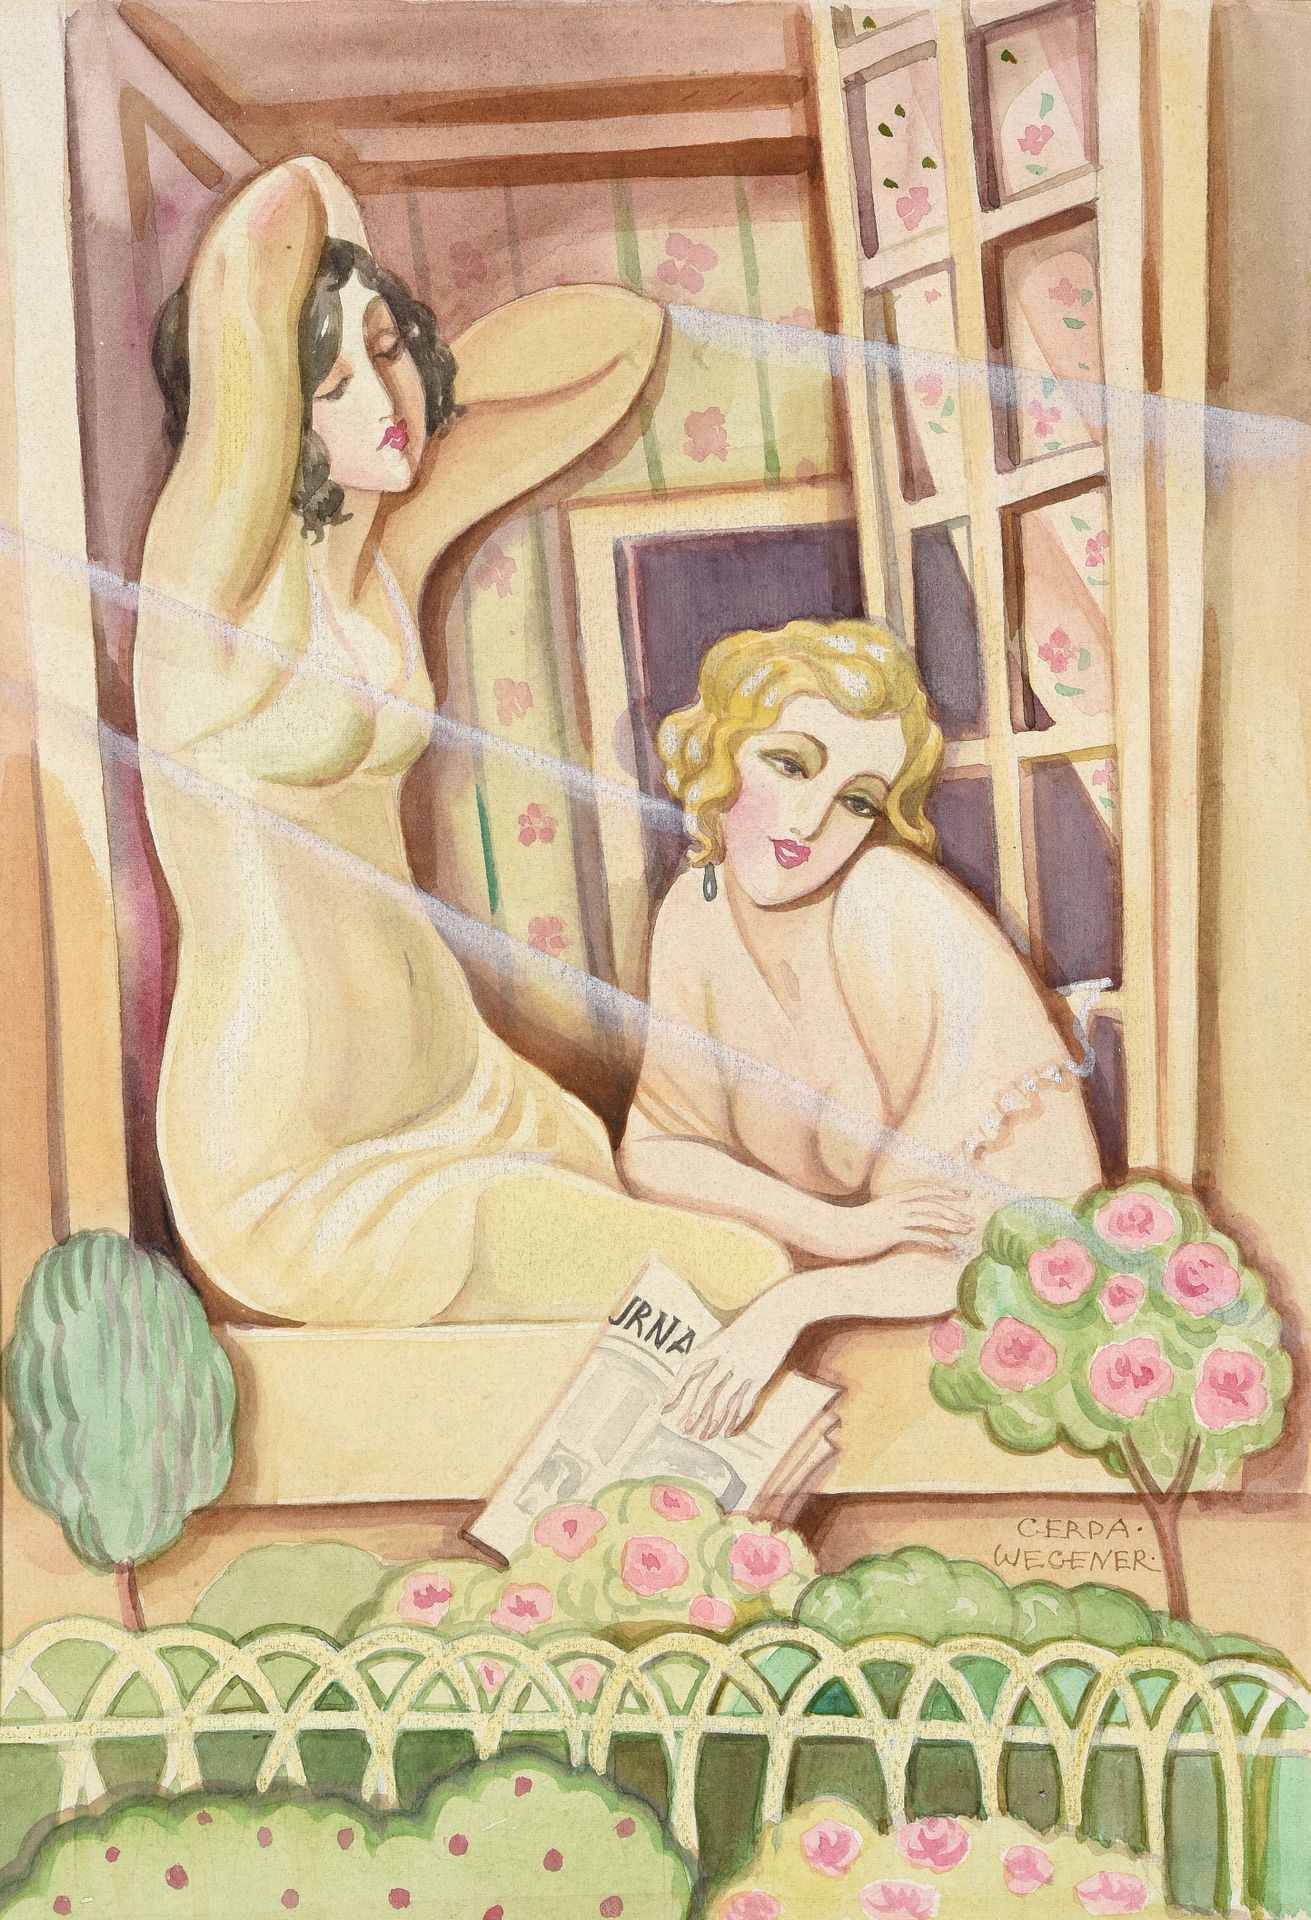 Null 格尔达-魏格纳 (1885-1940)

窗前的女人

水彩画和铅笔

右下方有签名

32 x 22.5 cm (正在观看)



出处

私人收藏